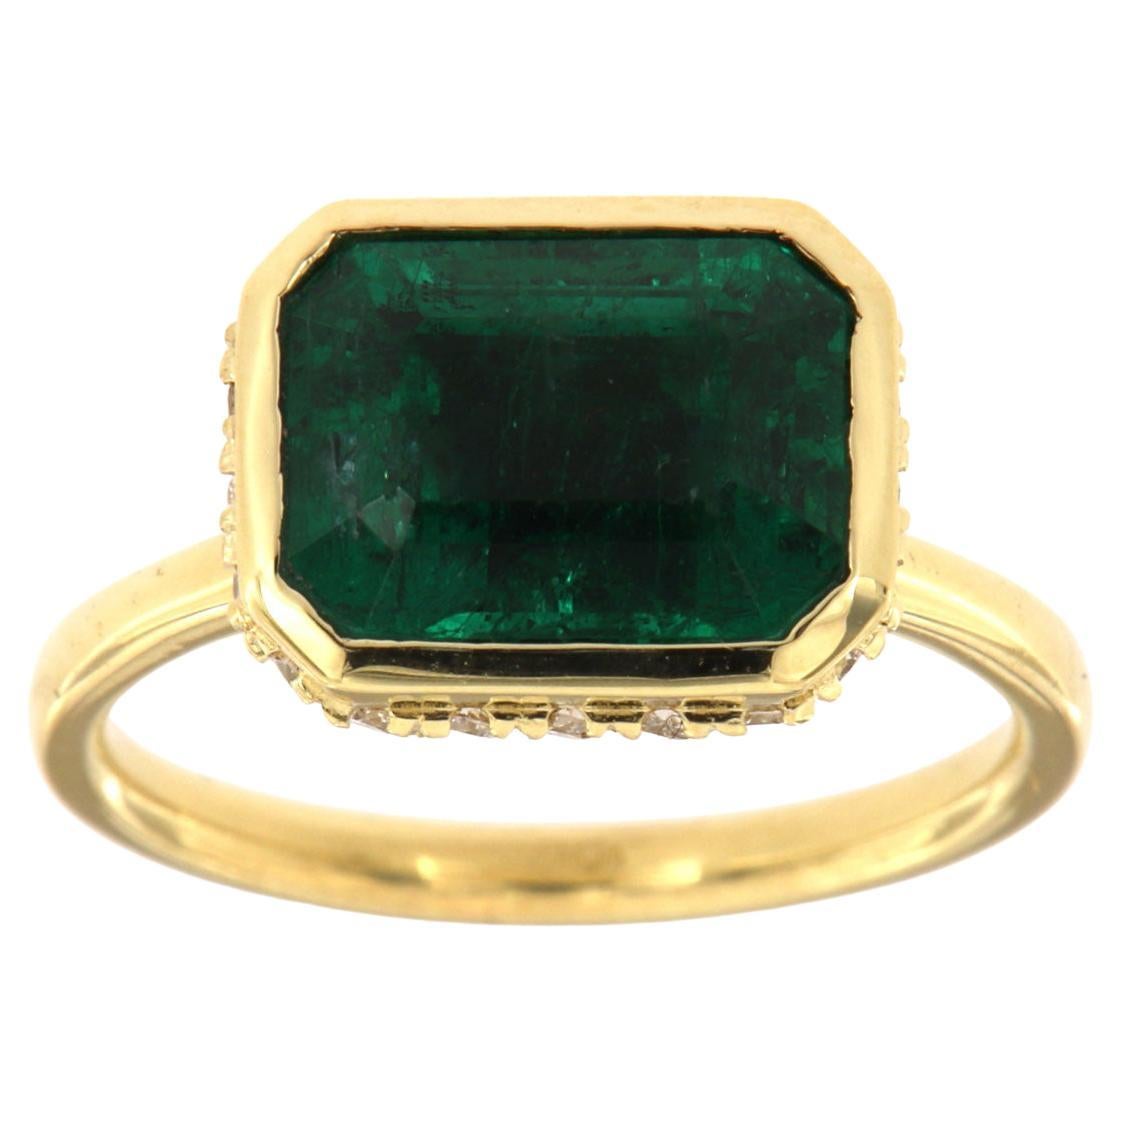 GIA Certified 3.93 Carat Green Emerald Bezel Set in 18K Yellow Gold Diamond Ring